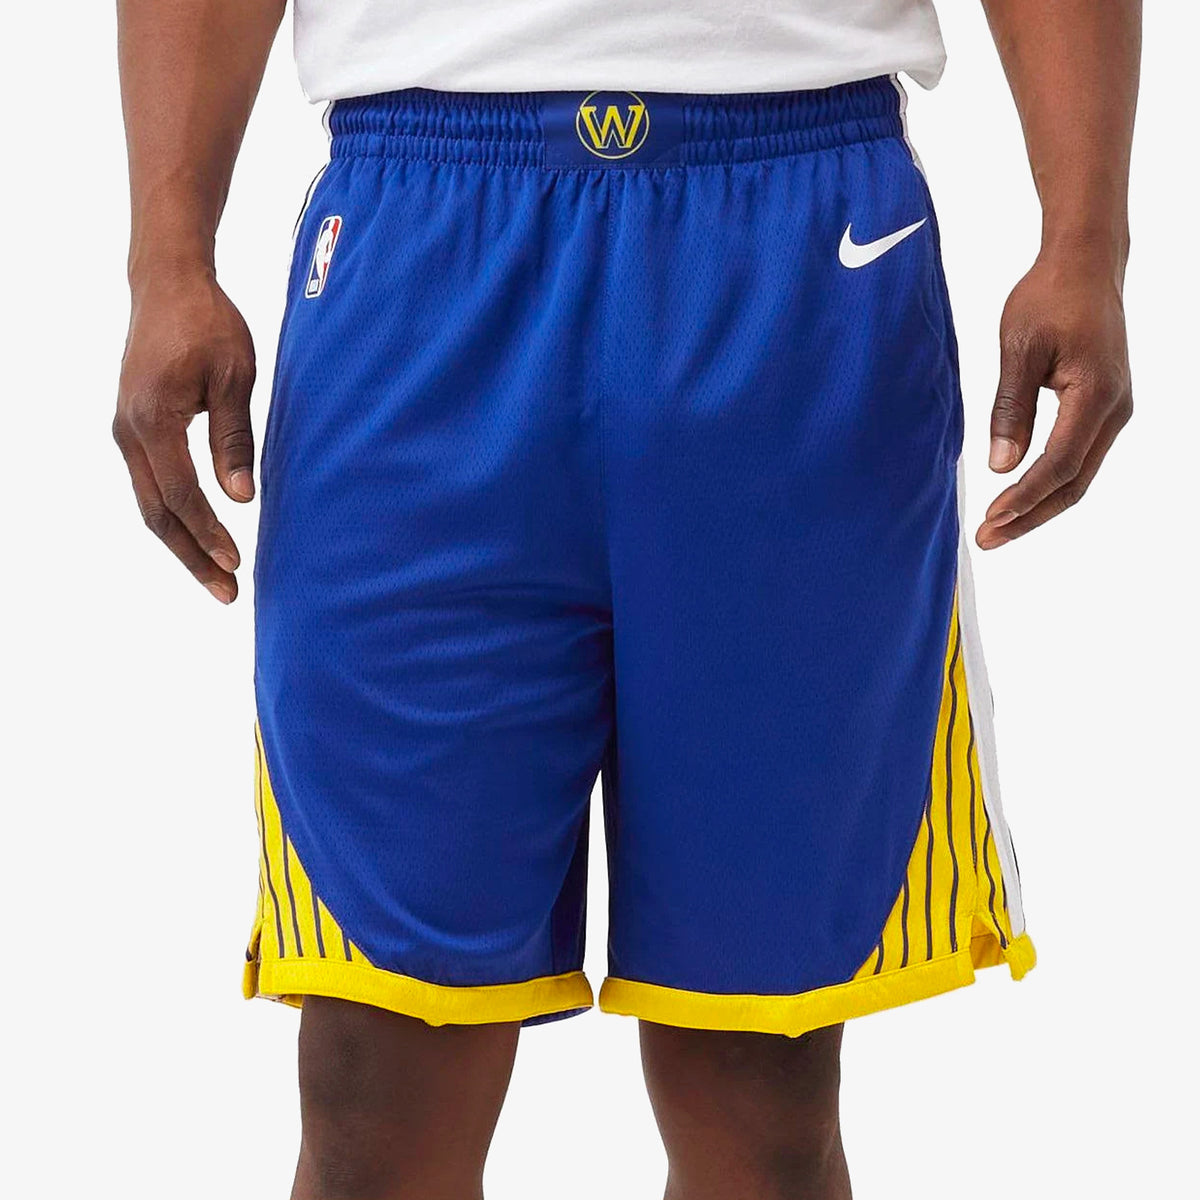 Brooklyn Nets Icon Edition Men's Nike NBA Swingman Shorts